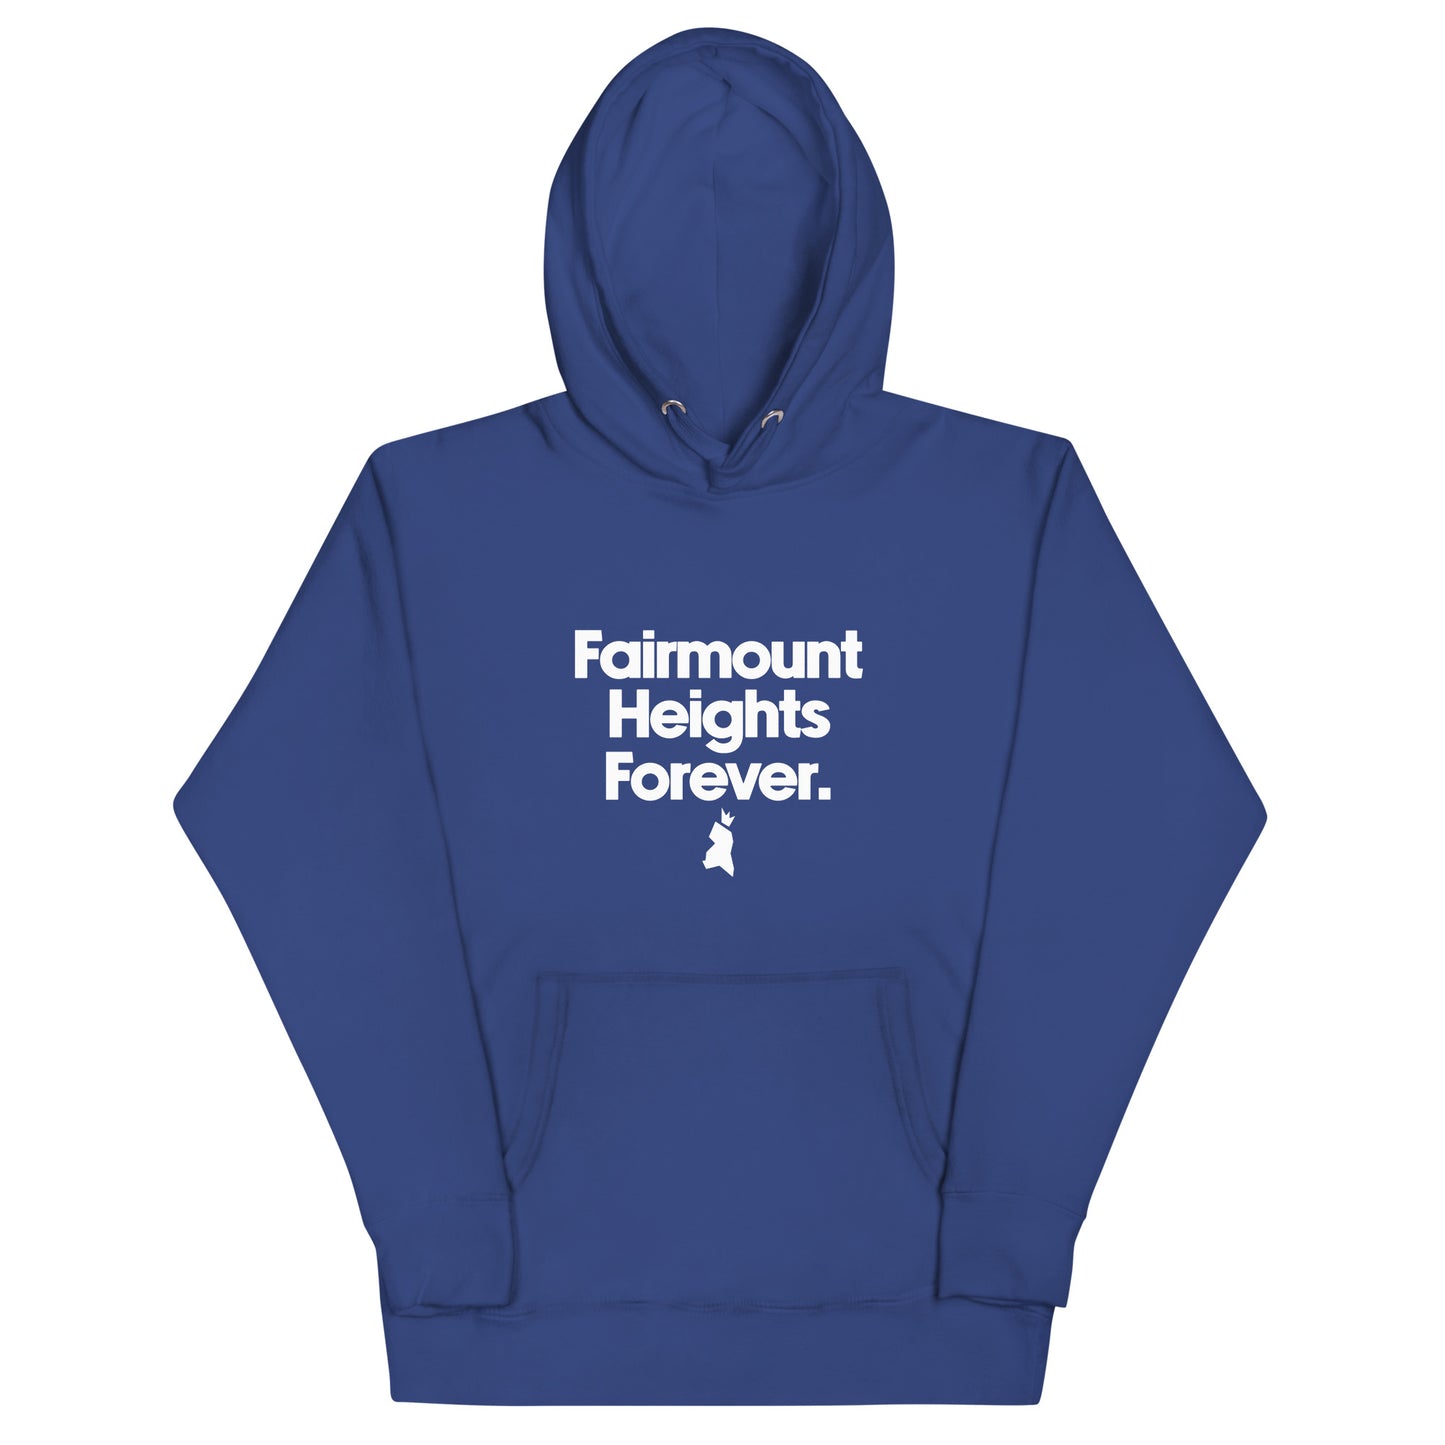 Fairmount Heights Forever Unisex Hoodie